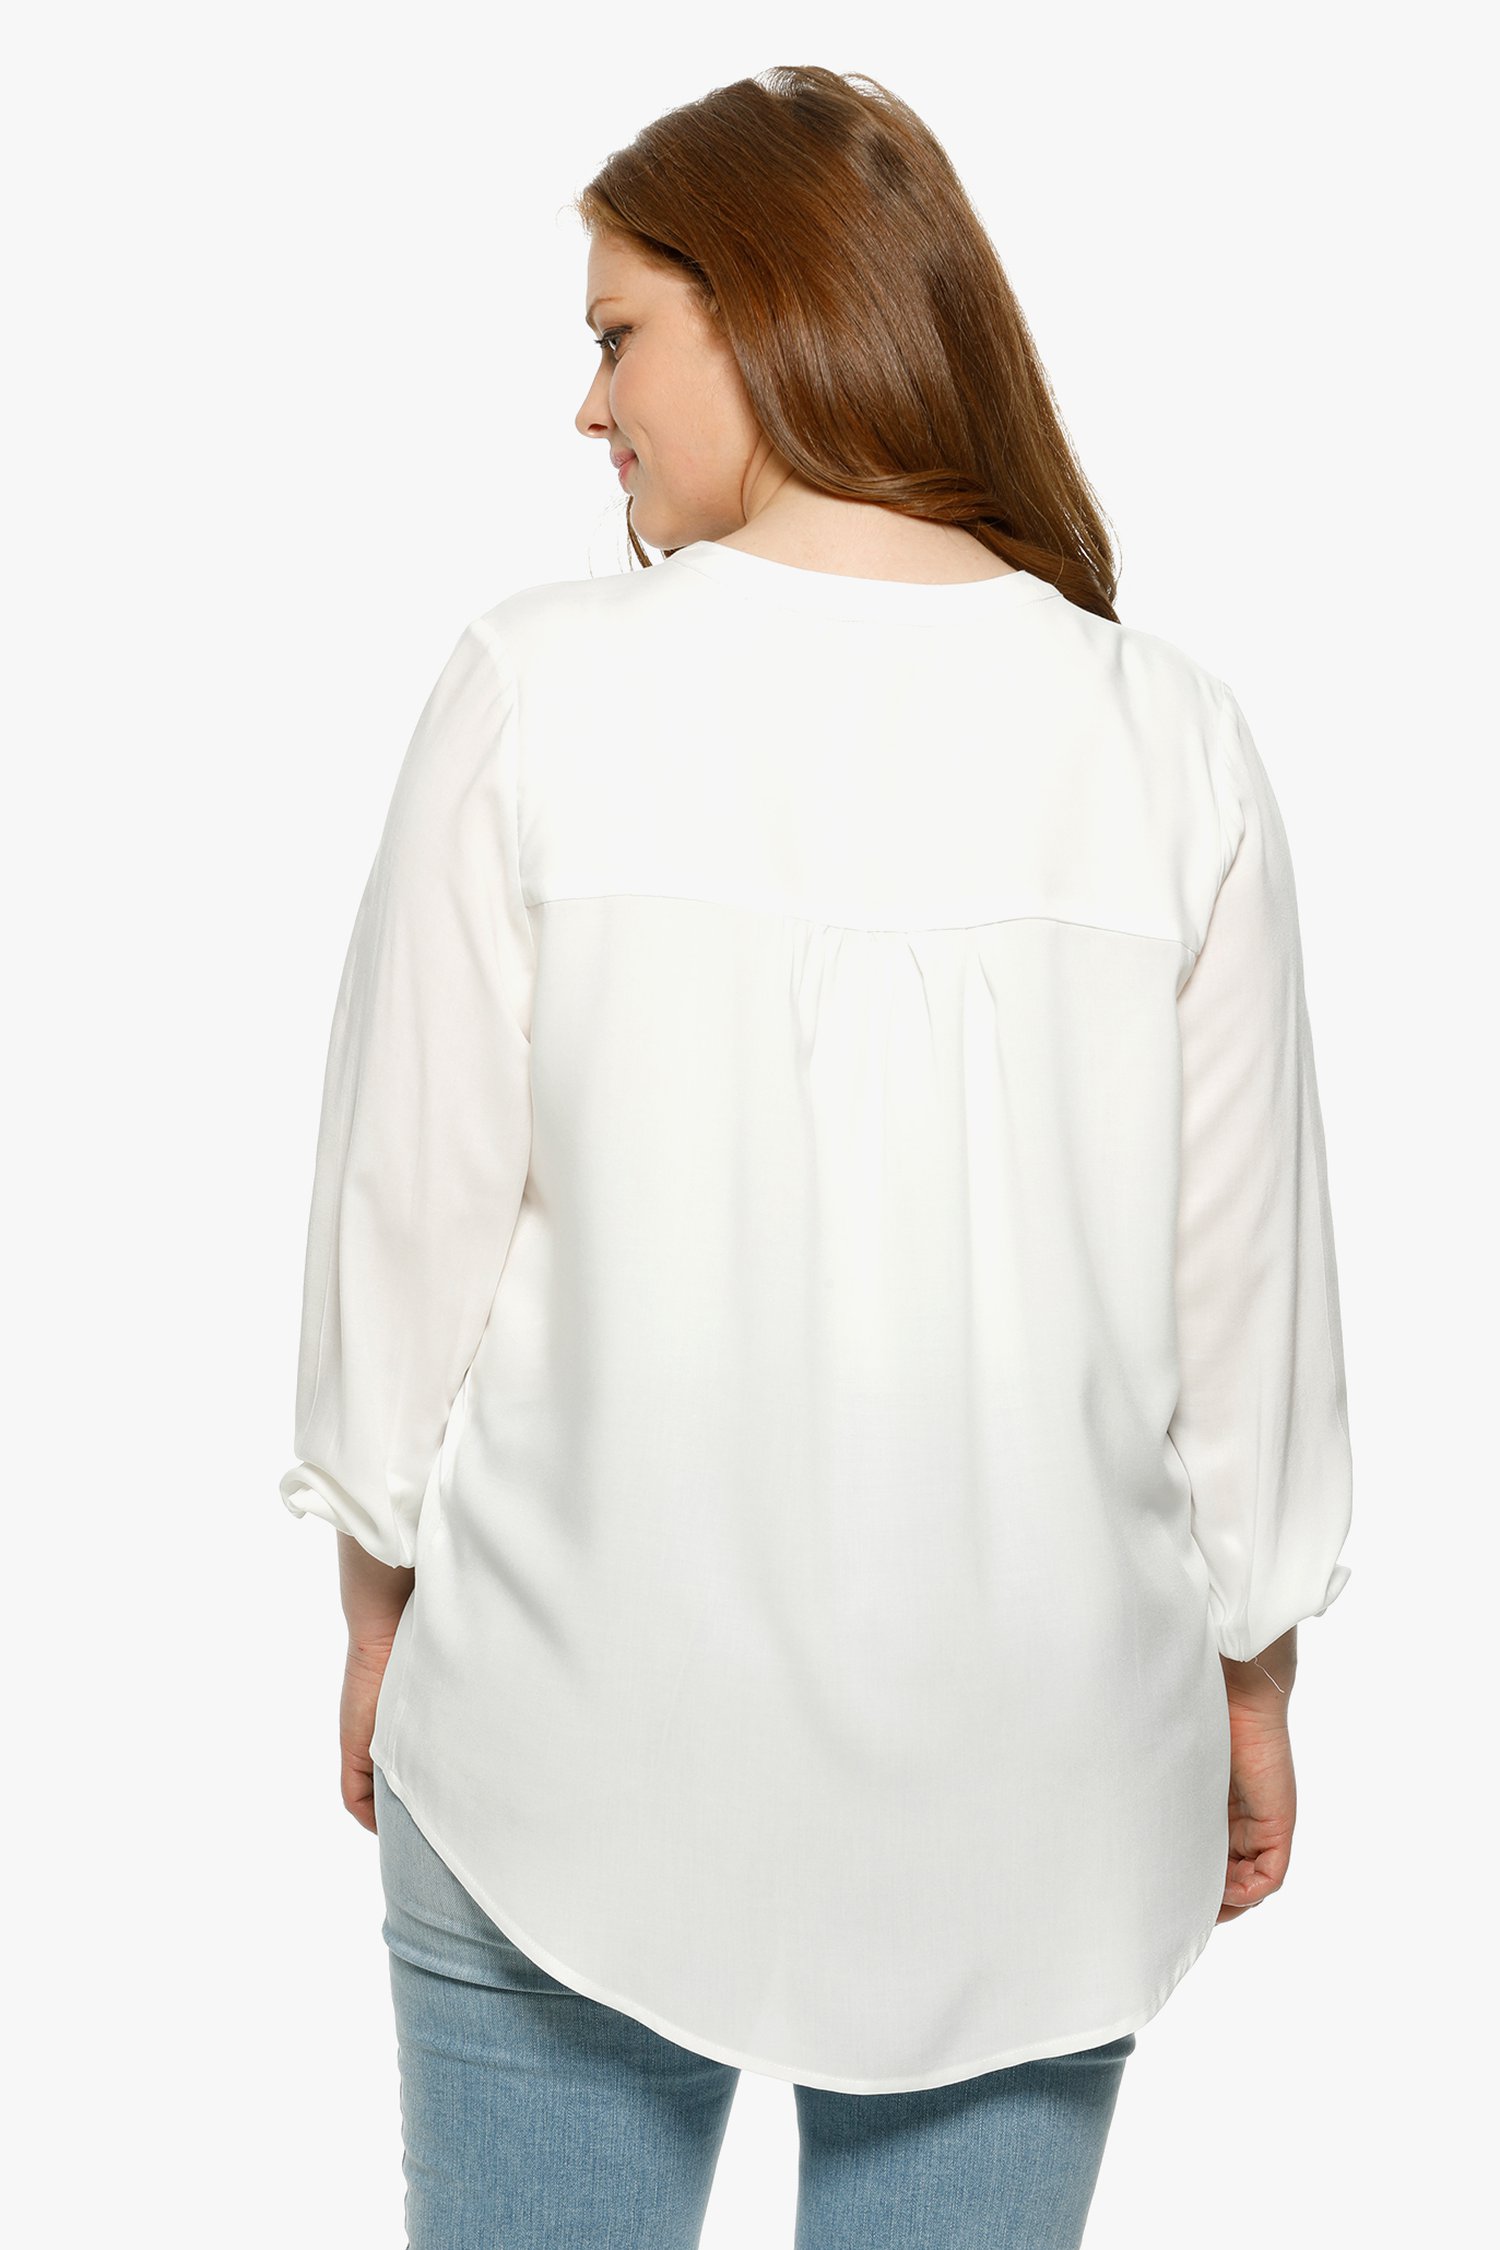 Witte blouse met V-hals van Only Carmakoma voor Dames